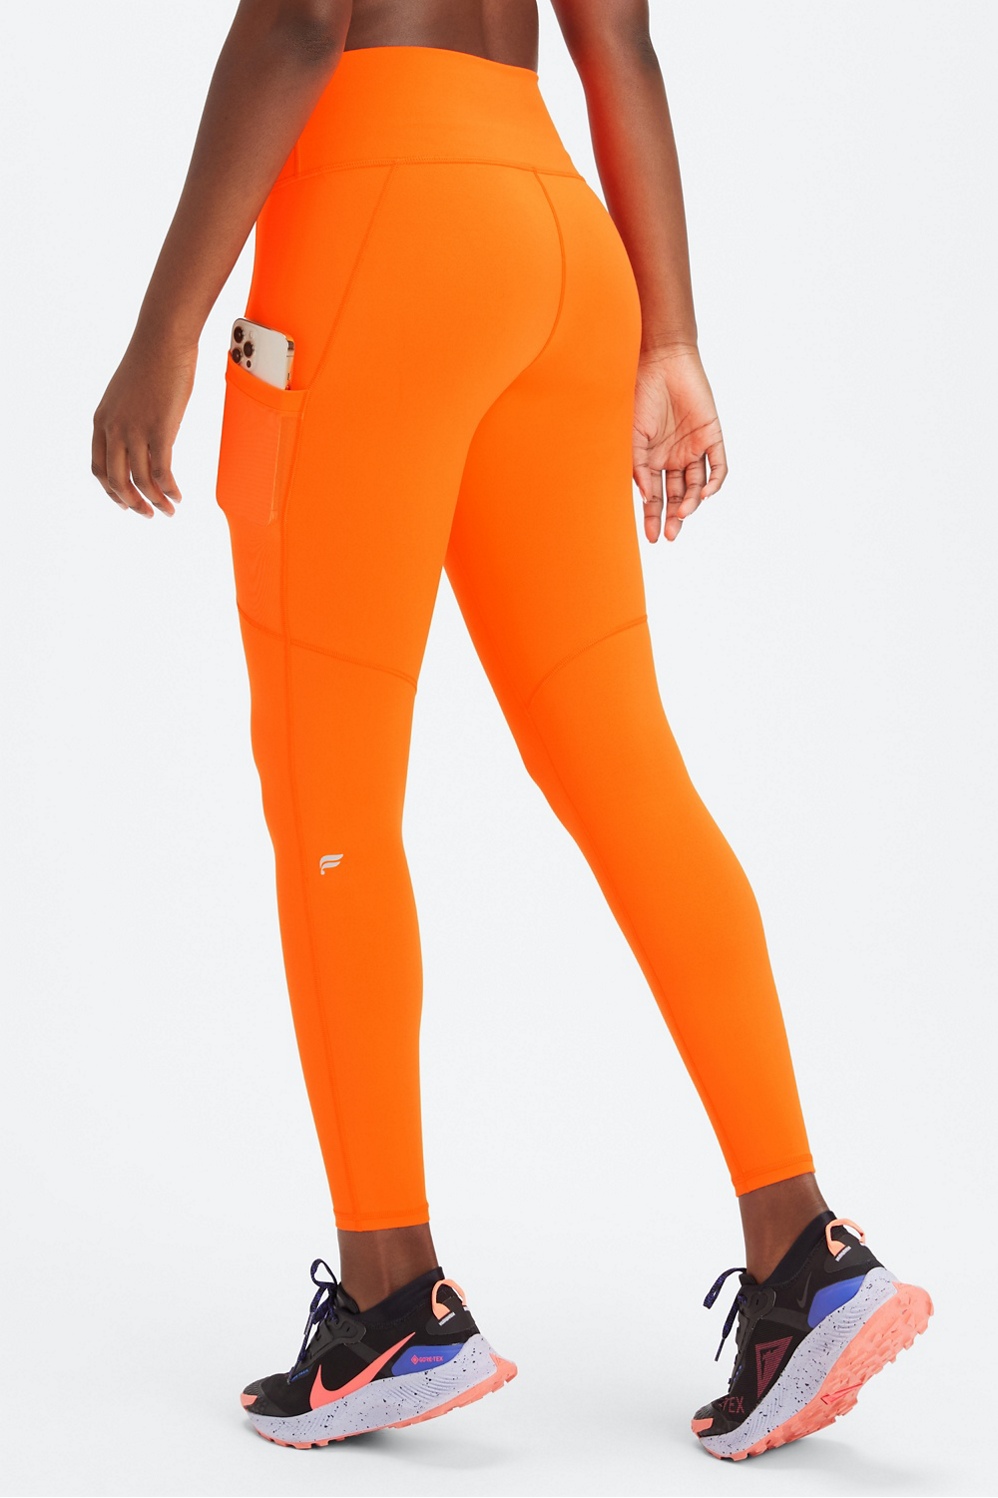 Orange Leggings Womens : Target